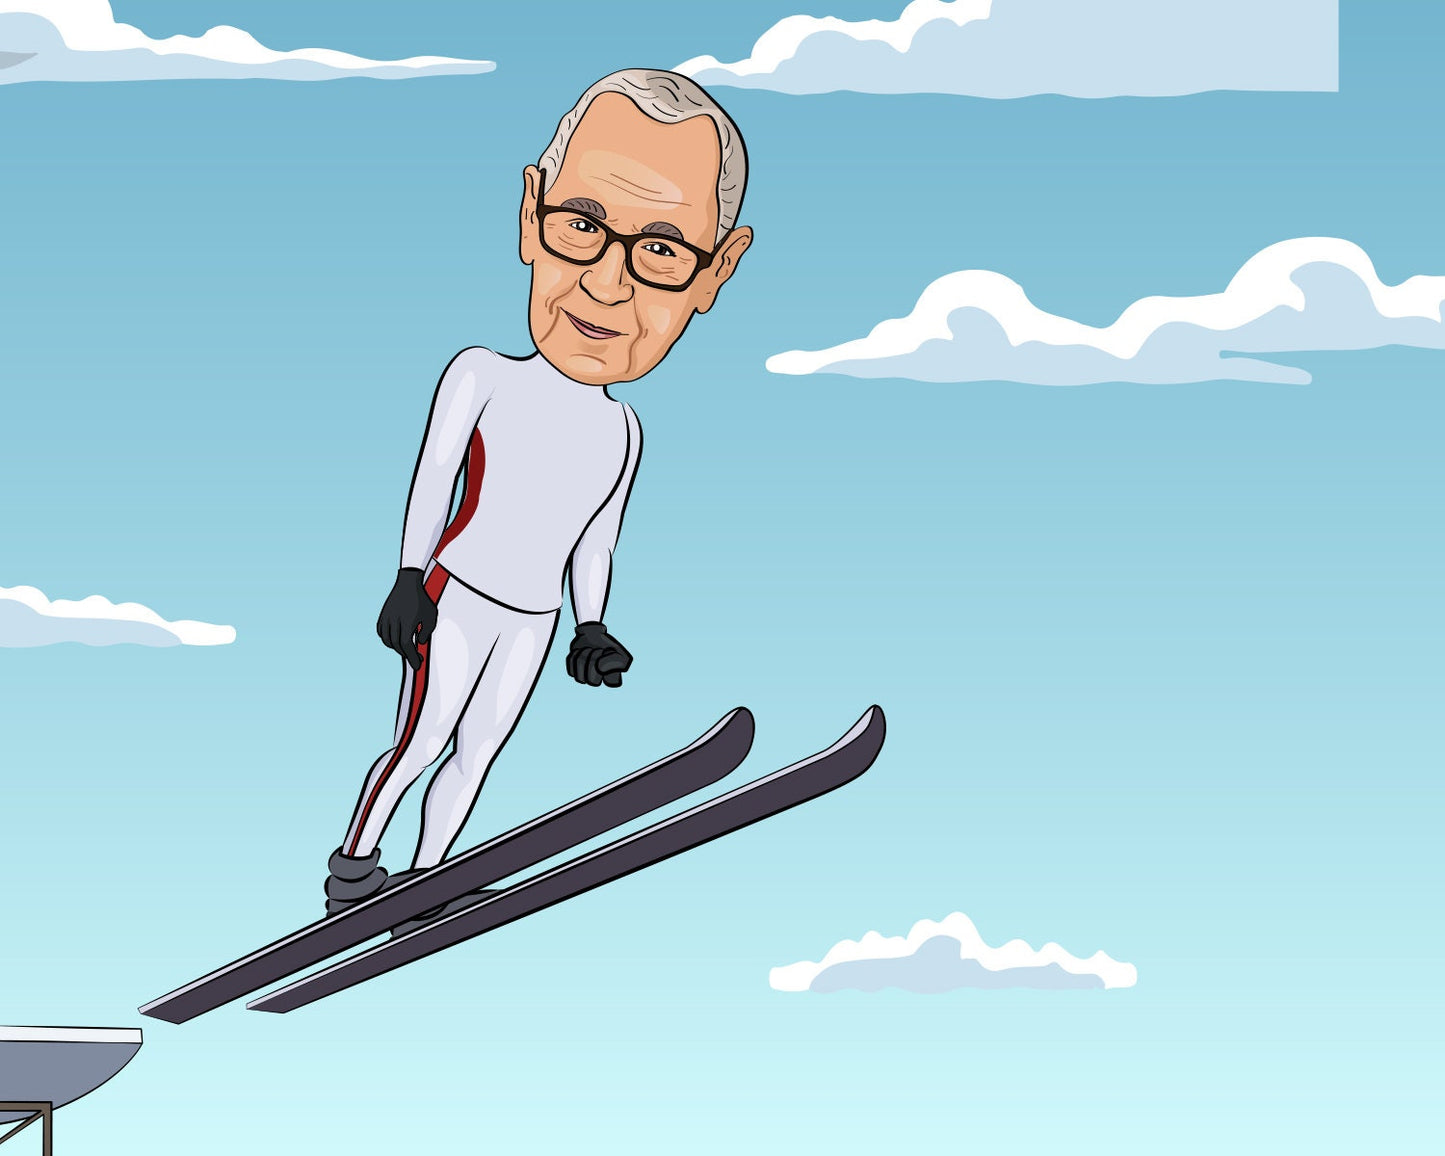 Ski Jumper Gift - Custom Caricature Portrait From Your Photo/Ski Jumping